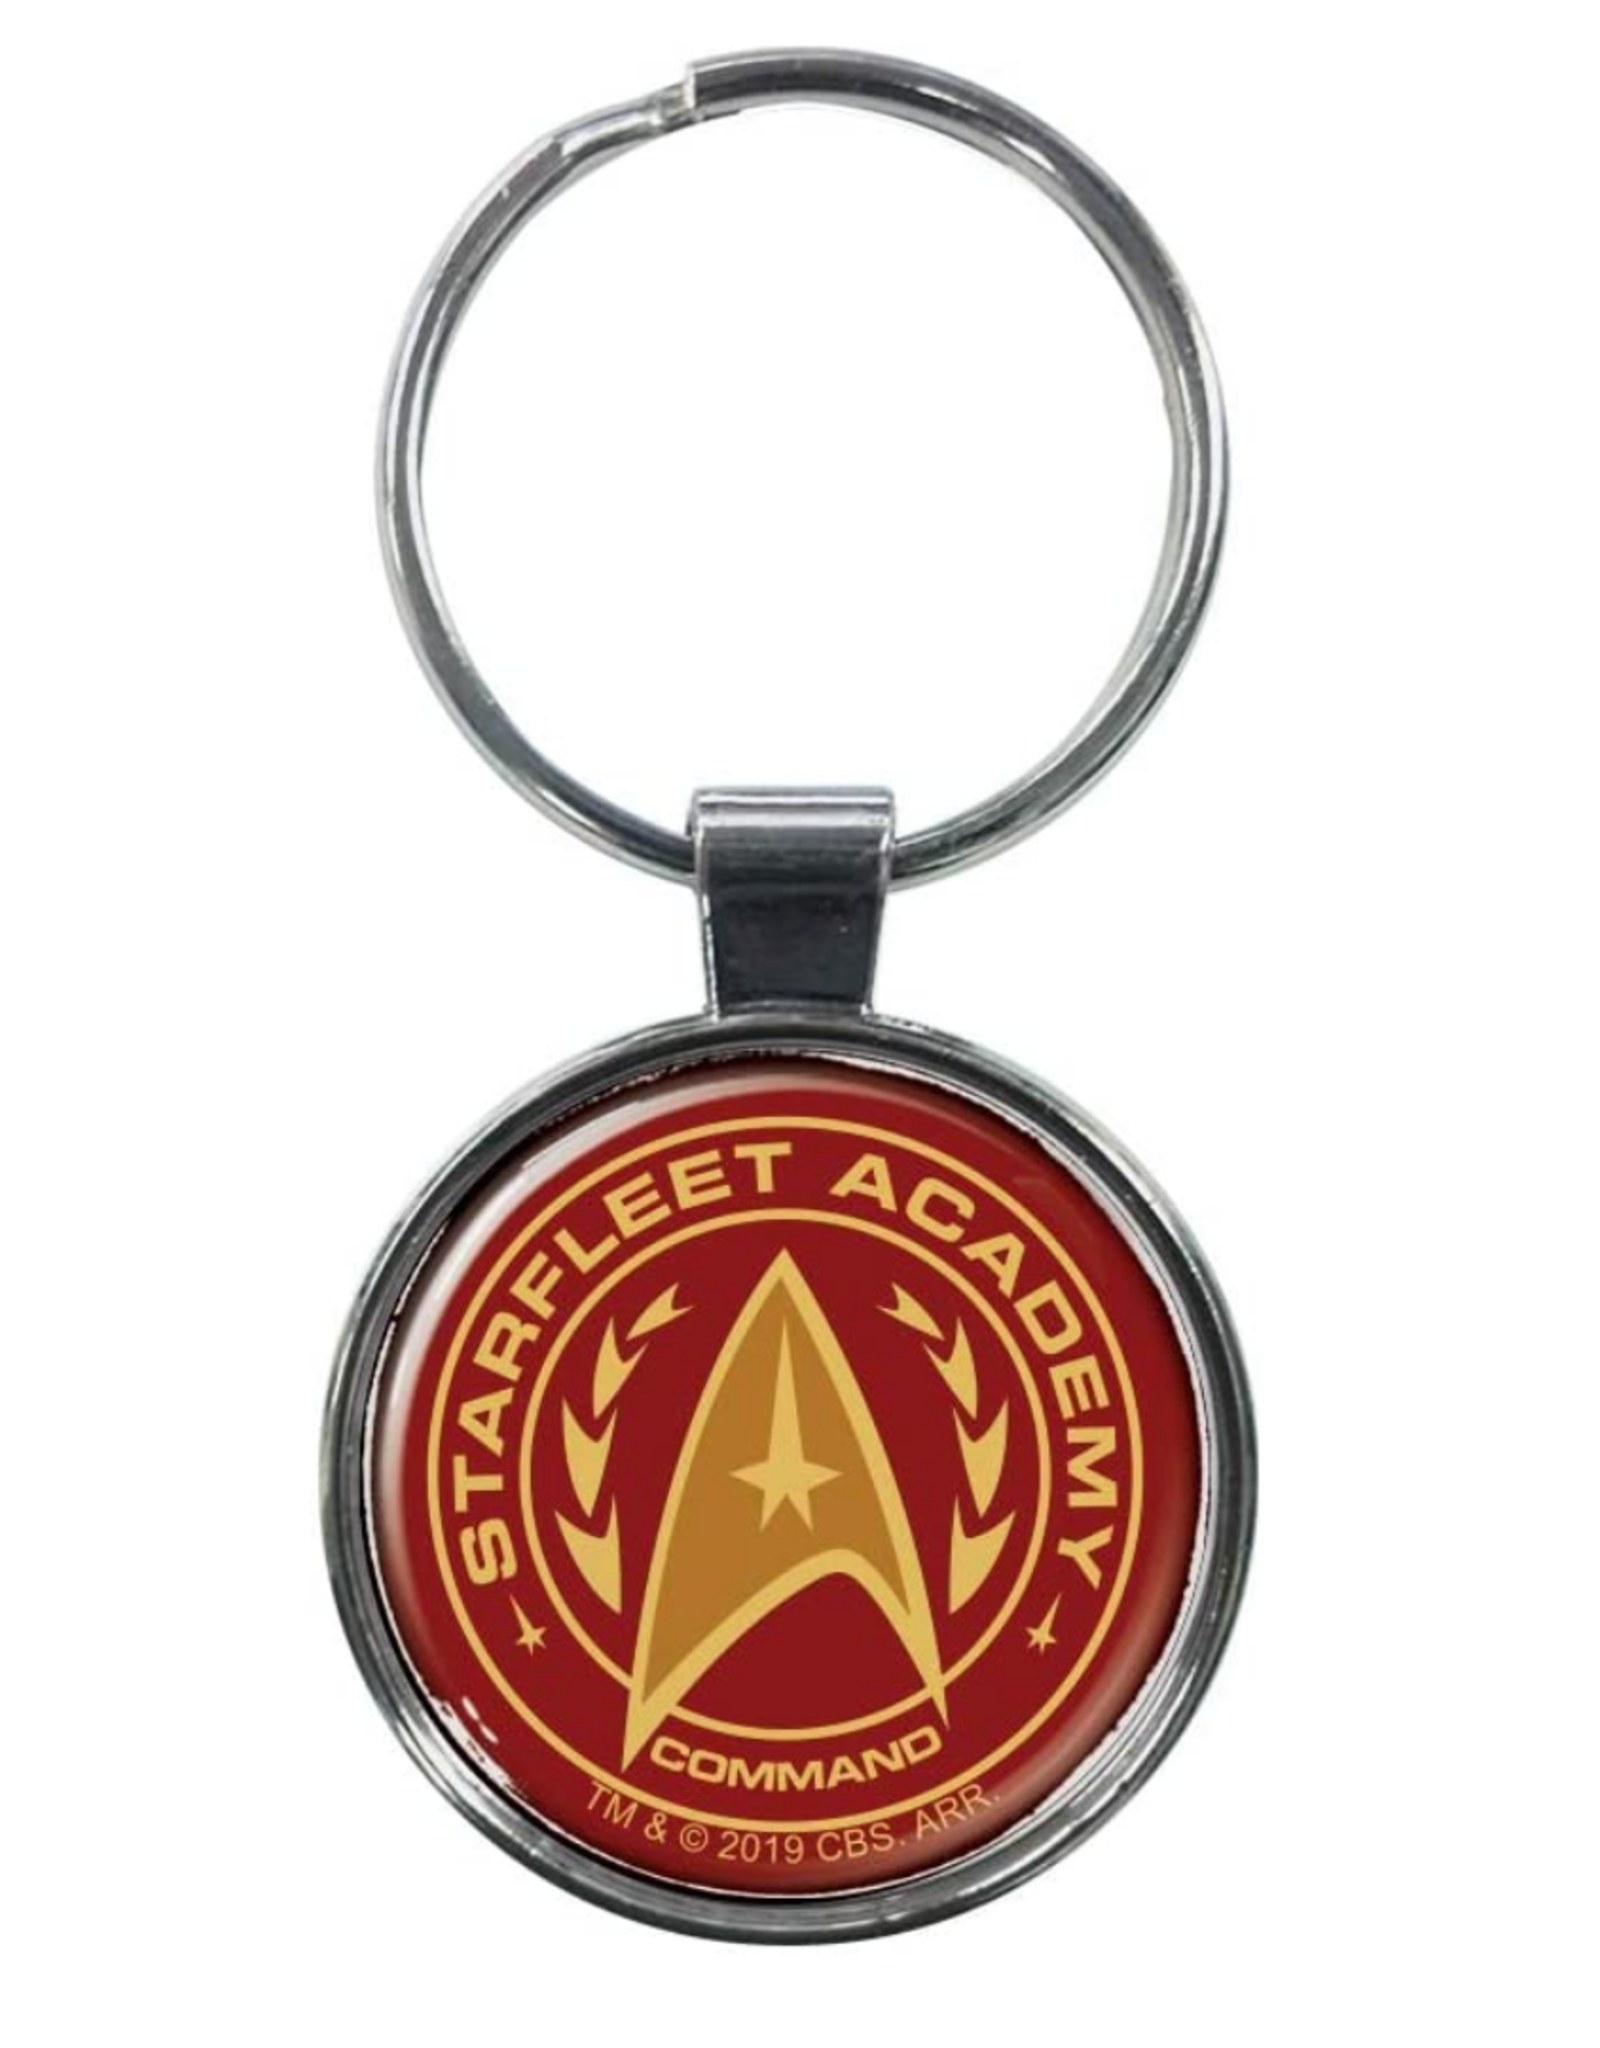 Ata-Boy Star Trek: Starfleet Academy Keychain